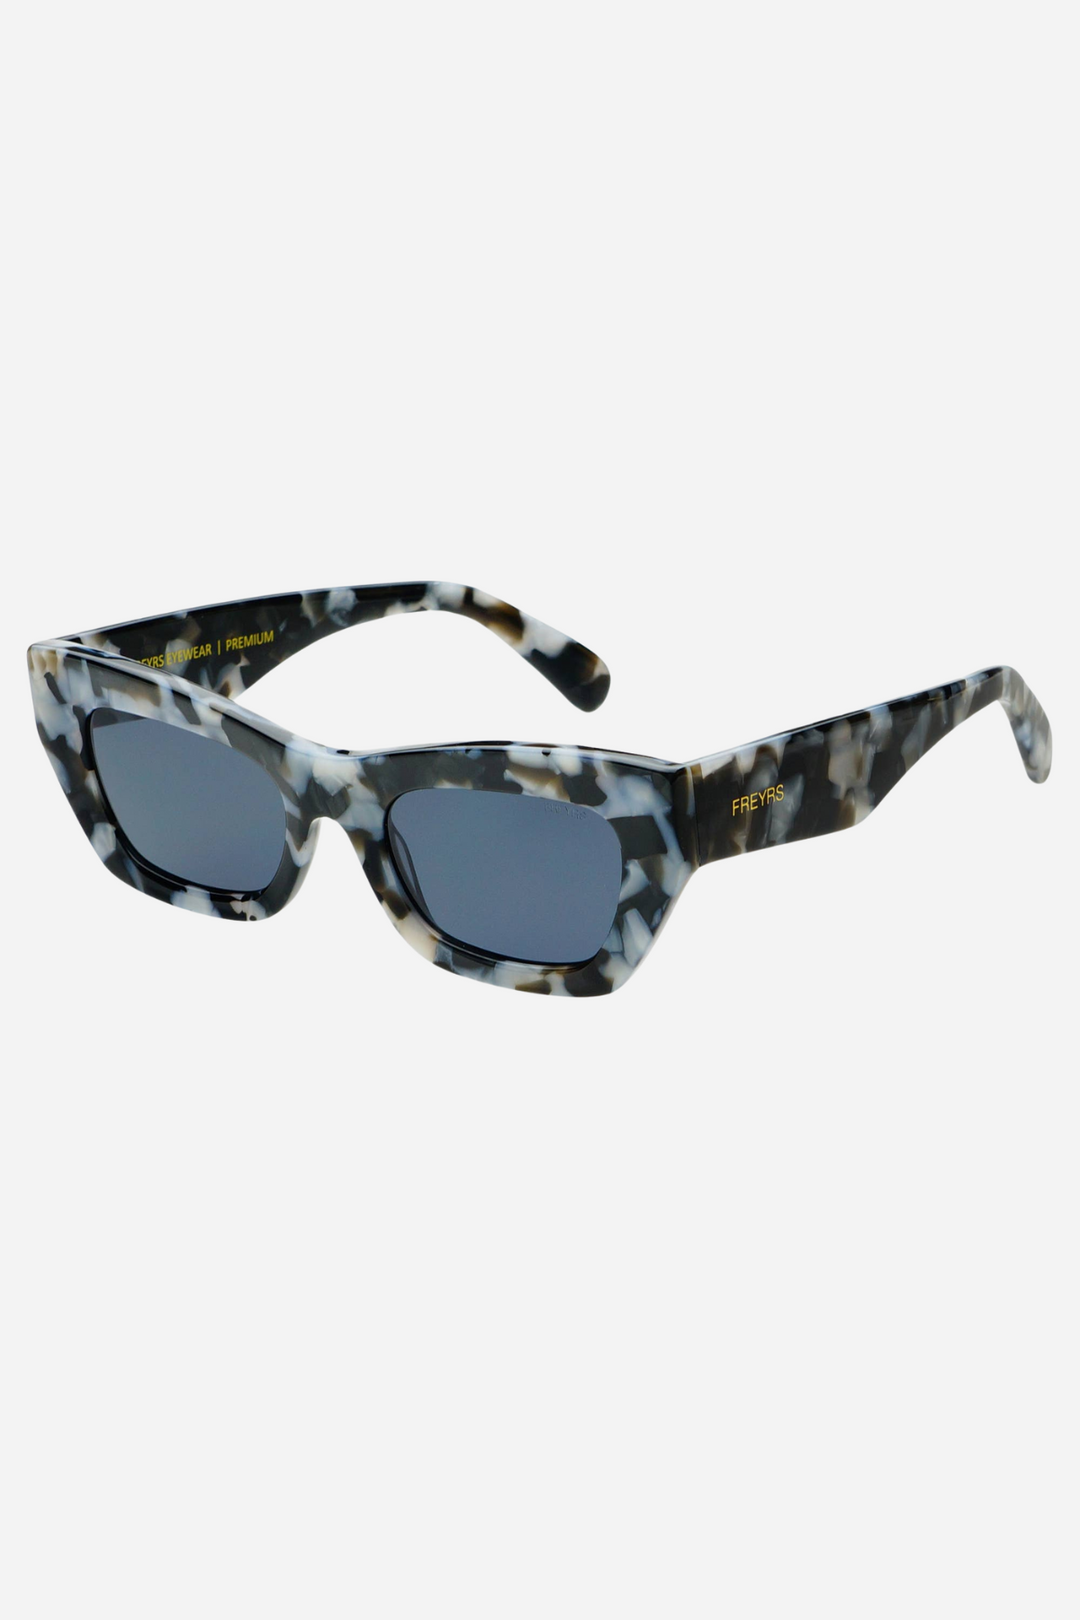 FREYRS Selina Cat Eye Sunglasses Gray Tortoise